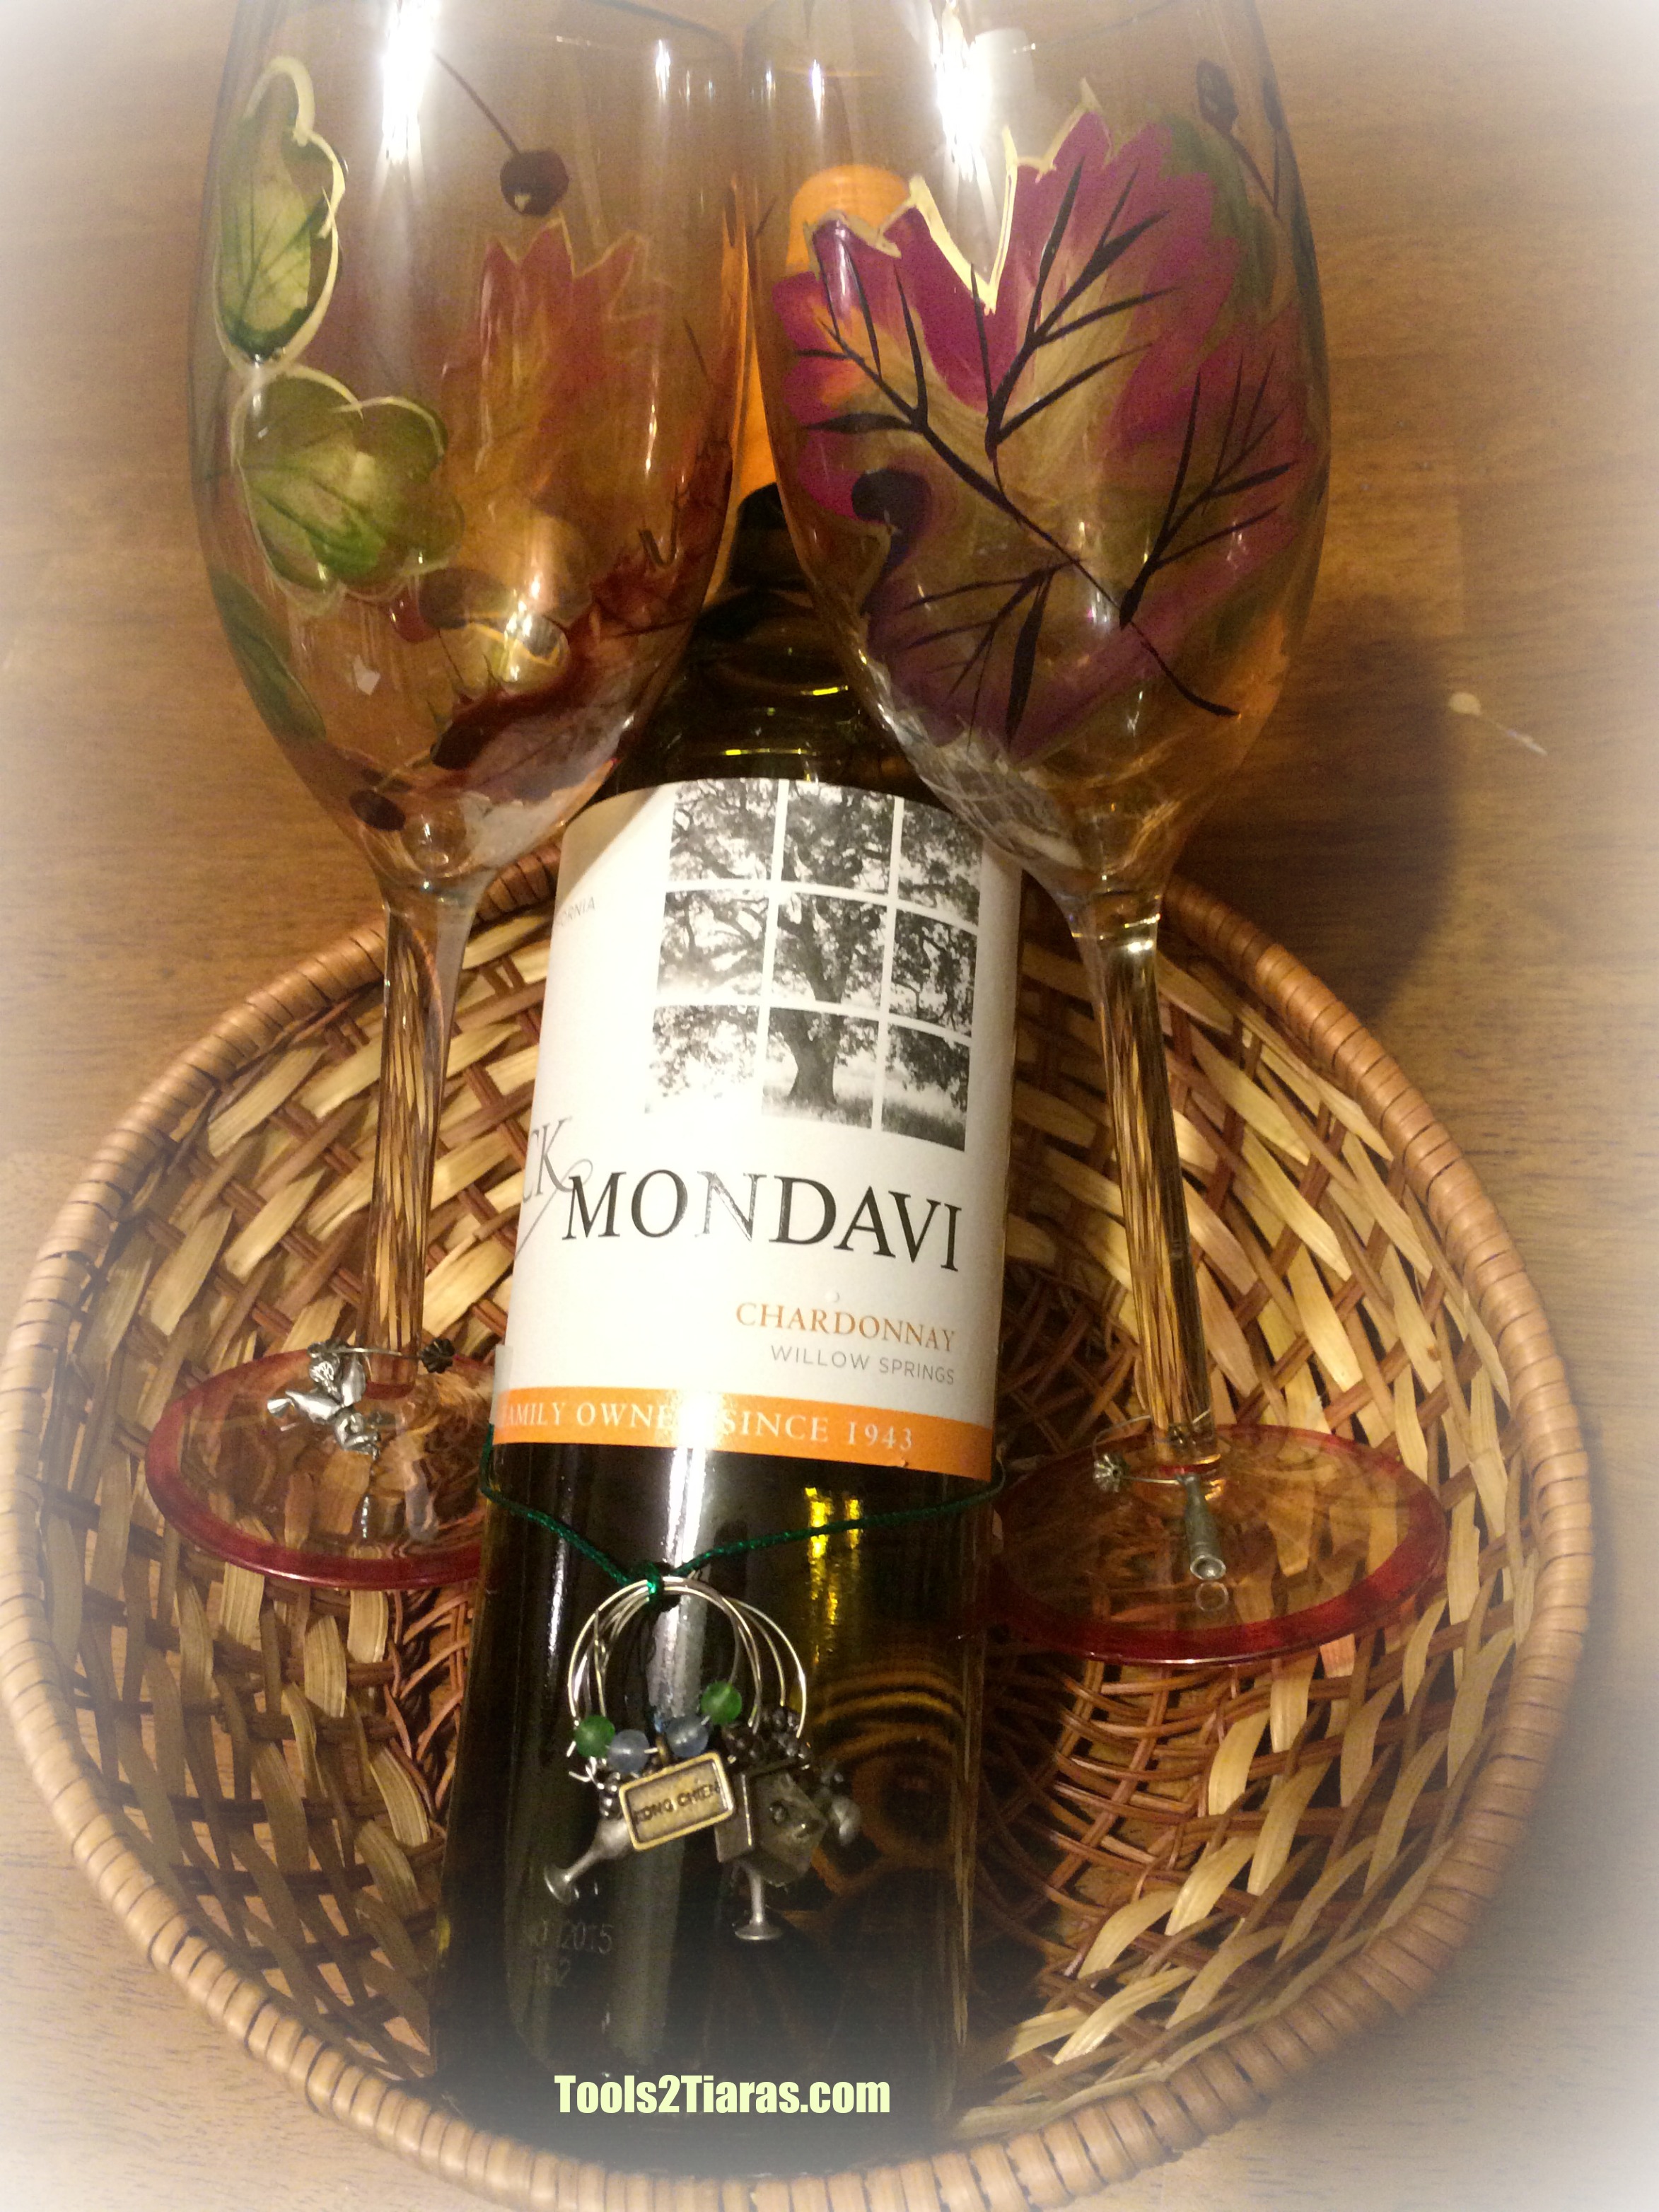 Wine charm gift basket